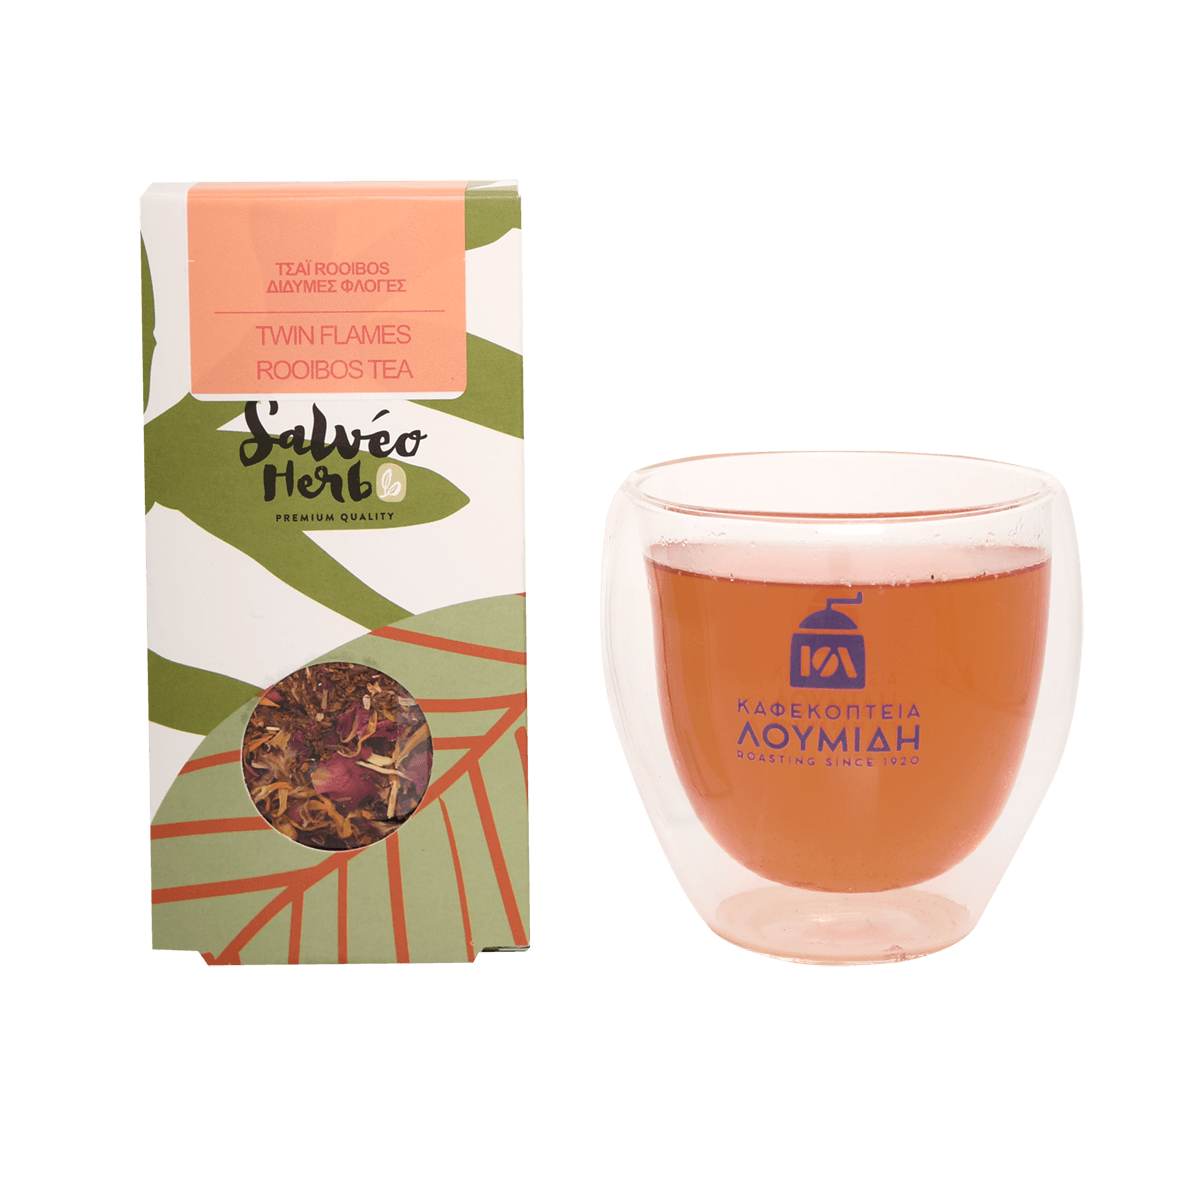 Rooibos Τσάι “Δίδυμες Φλόγες” | 75γρ - Καφεκοπτεία Λουμίδη